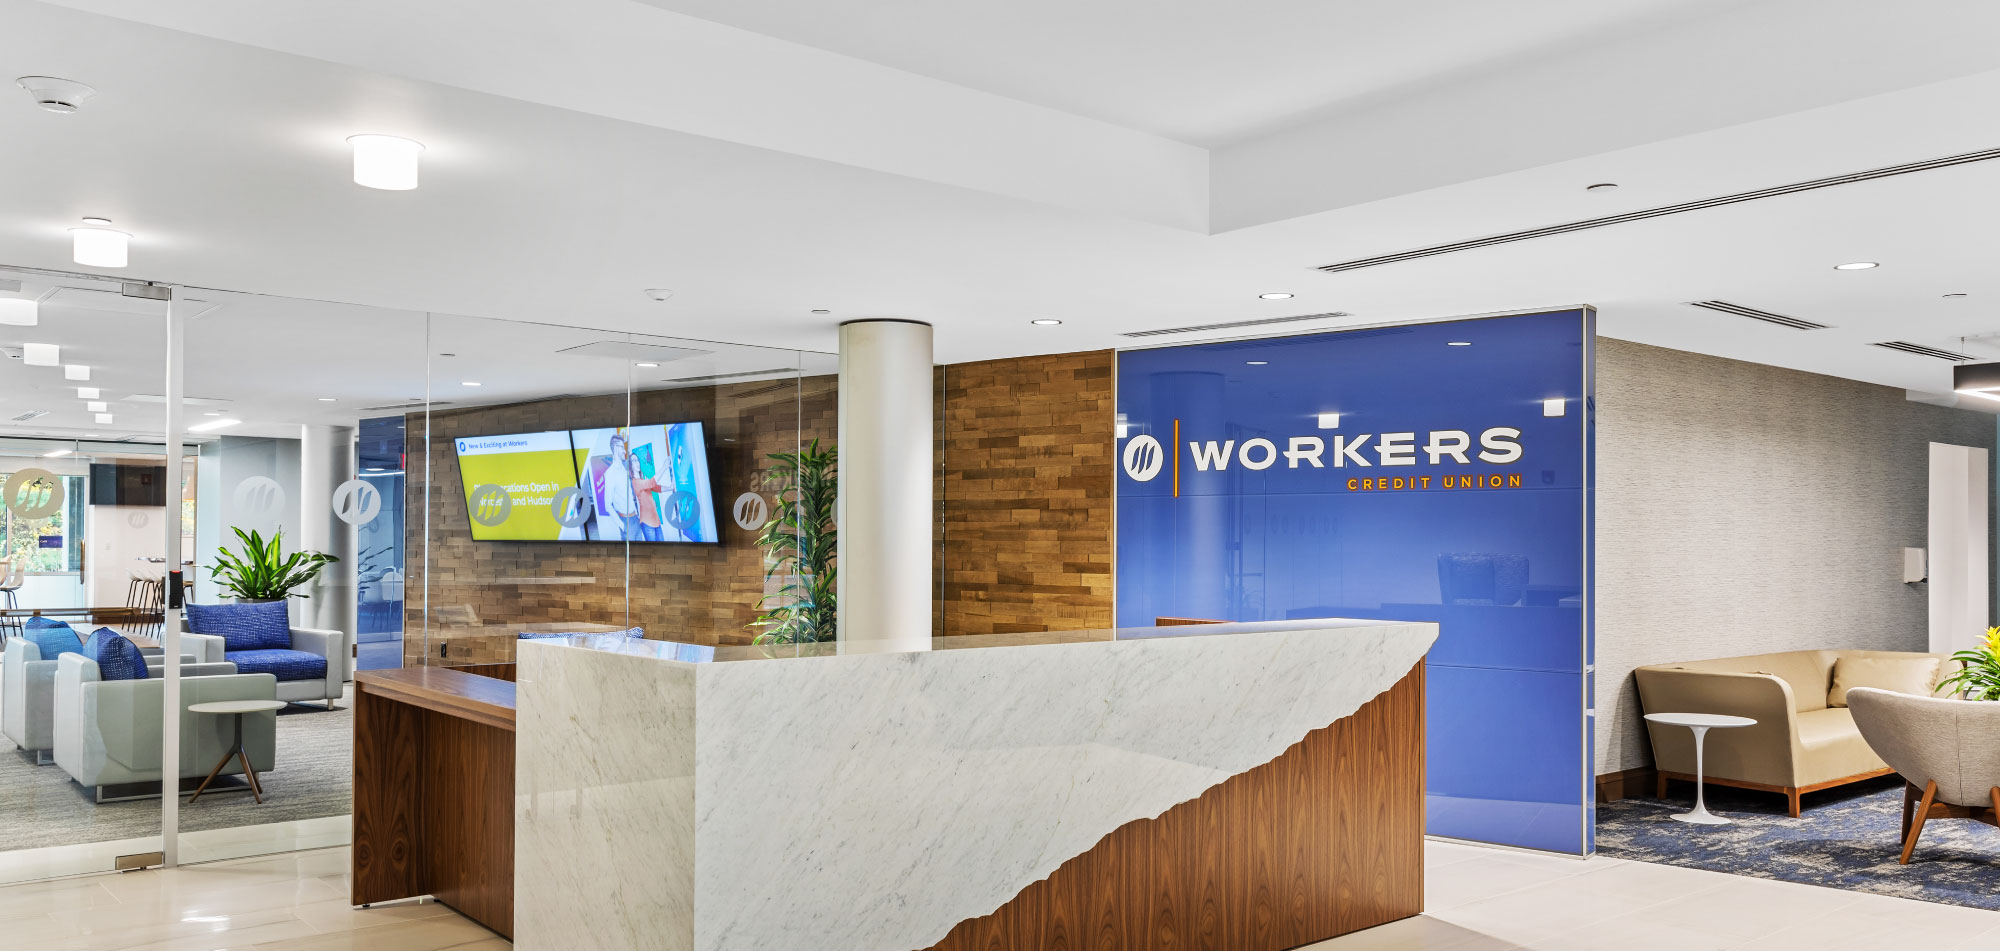 Workers Credit Union Corporate Interior Design